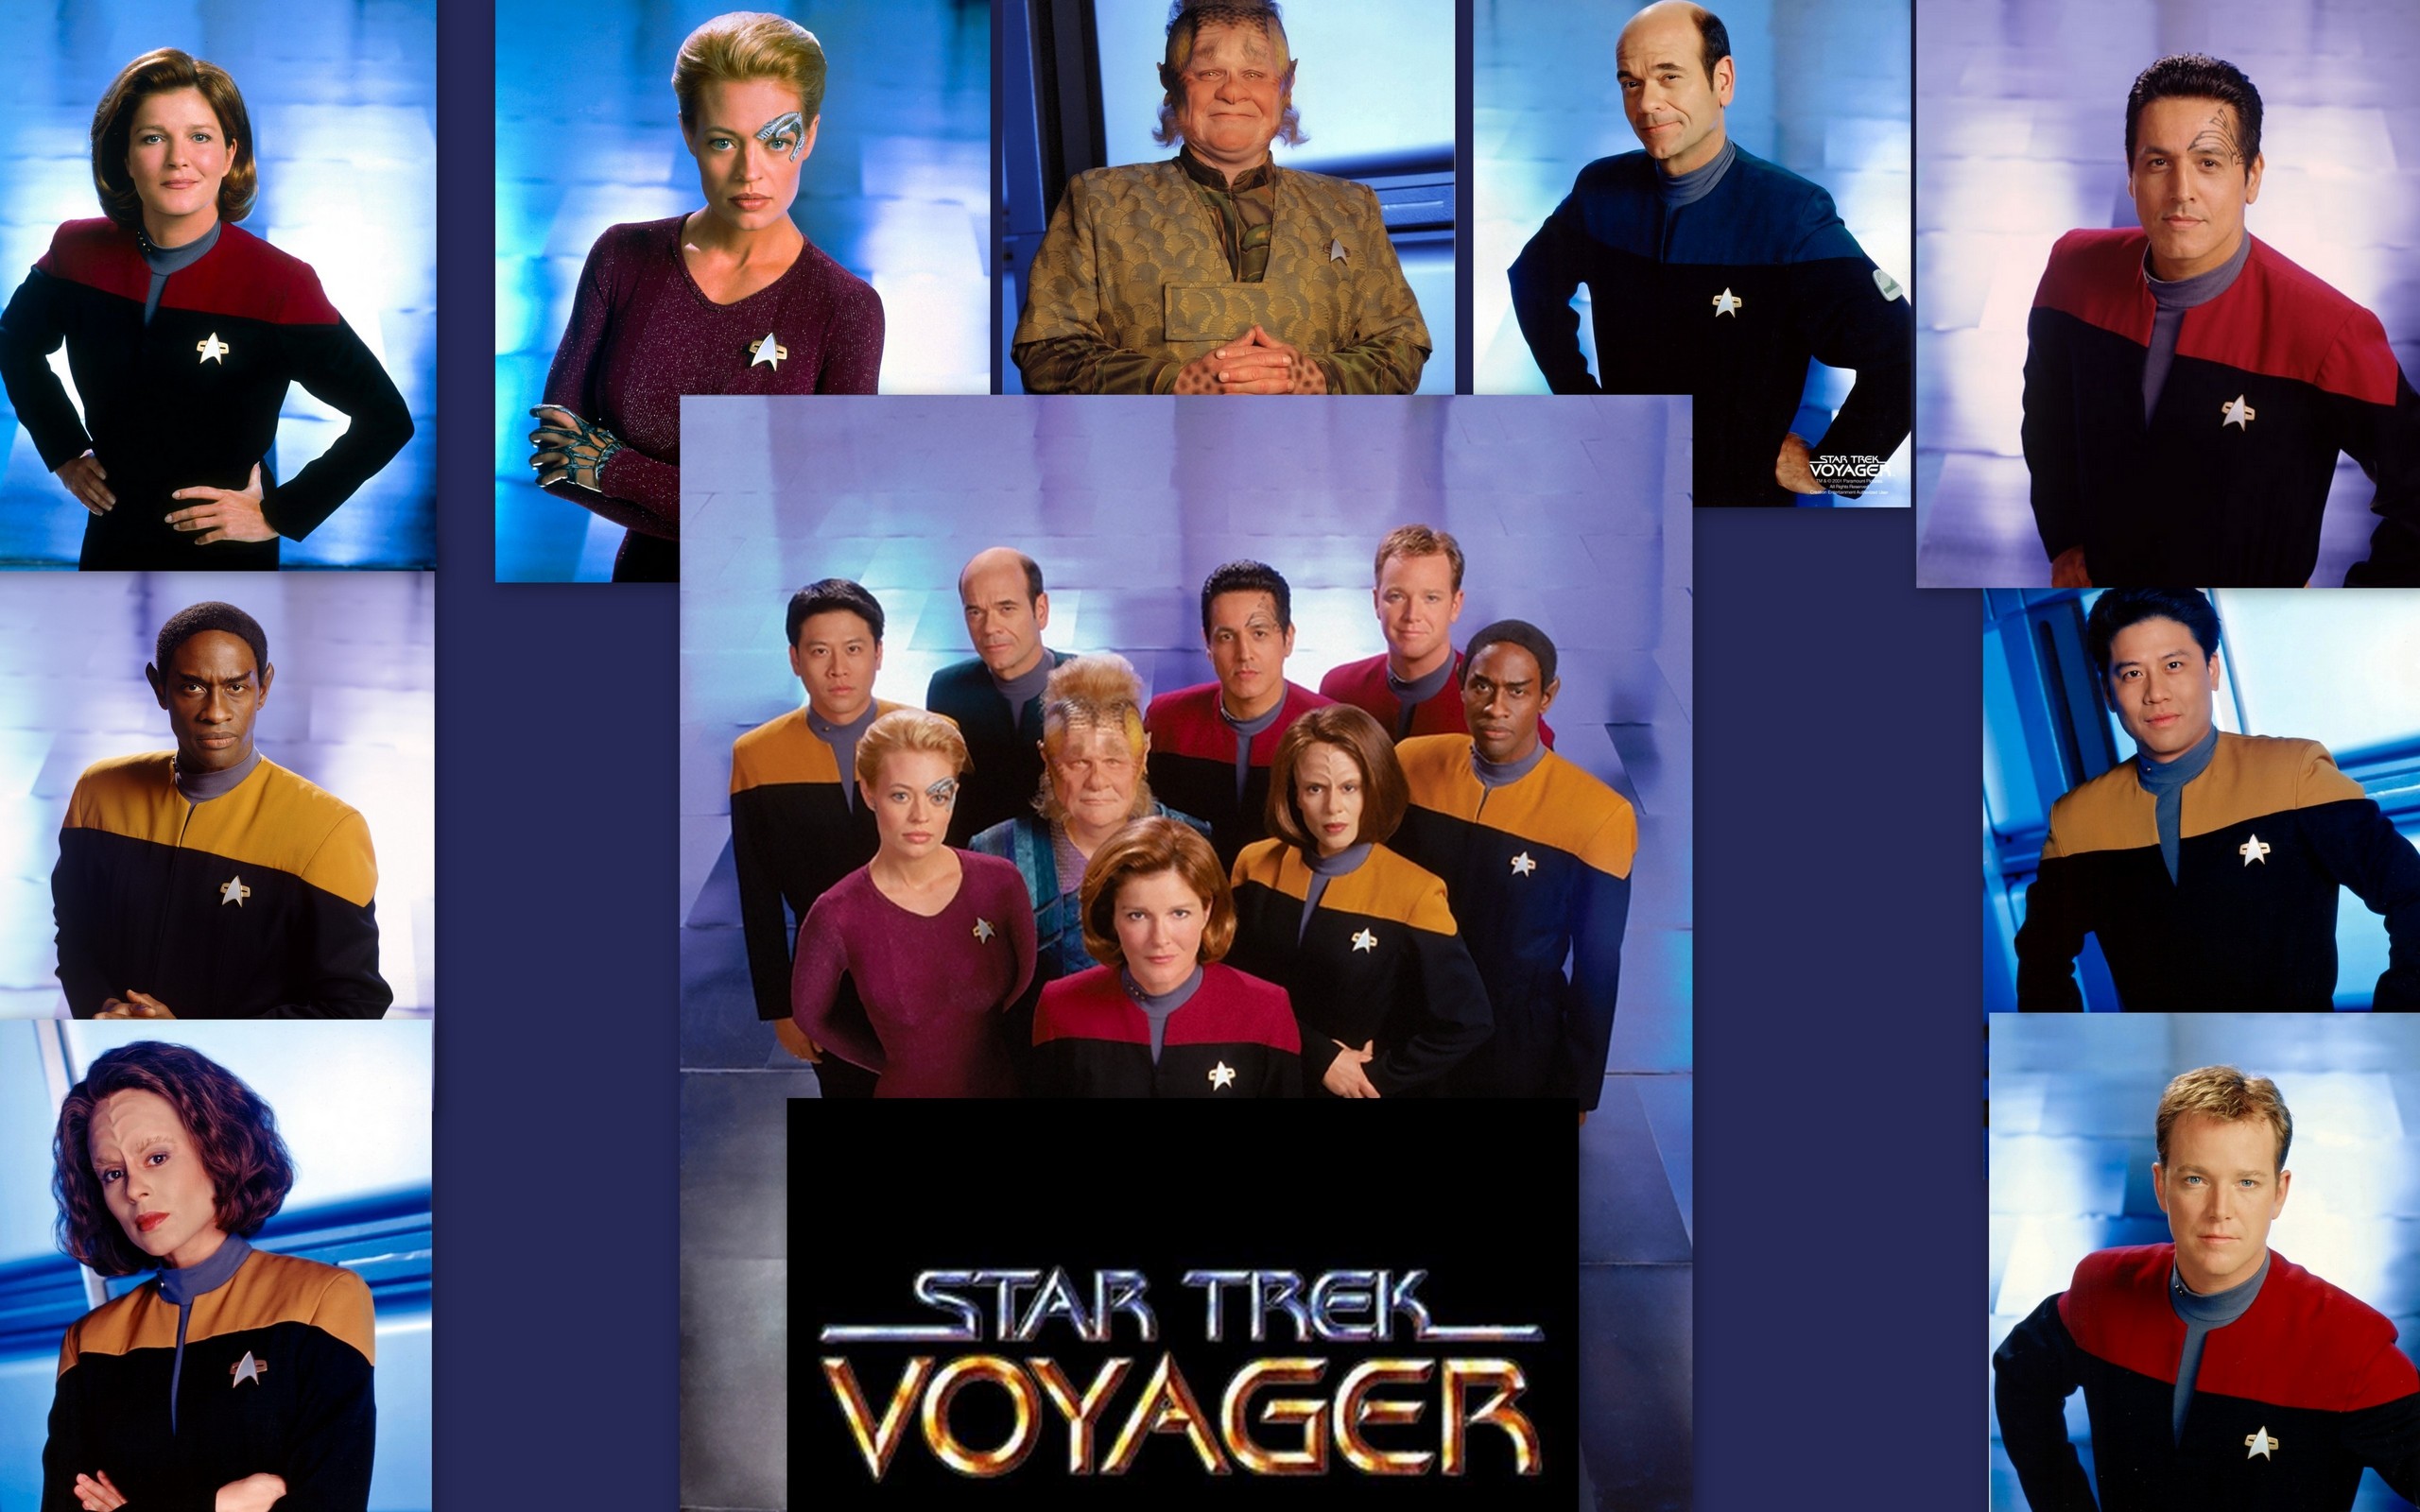 Wallpapers - Star Trek Voyager Wallpaper (10524240) - Fanpop